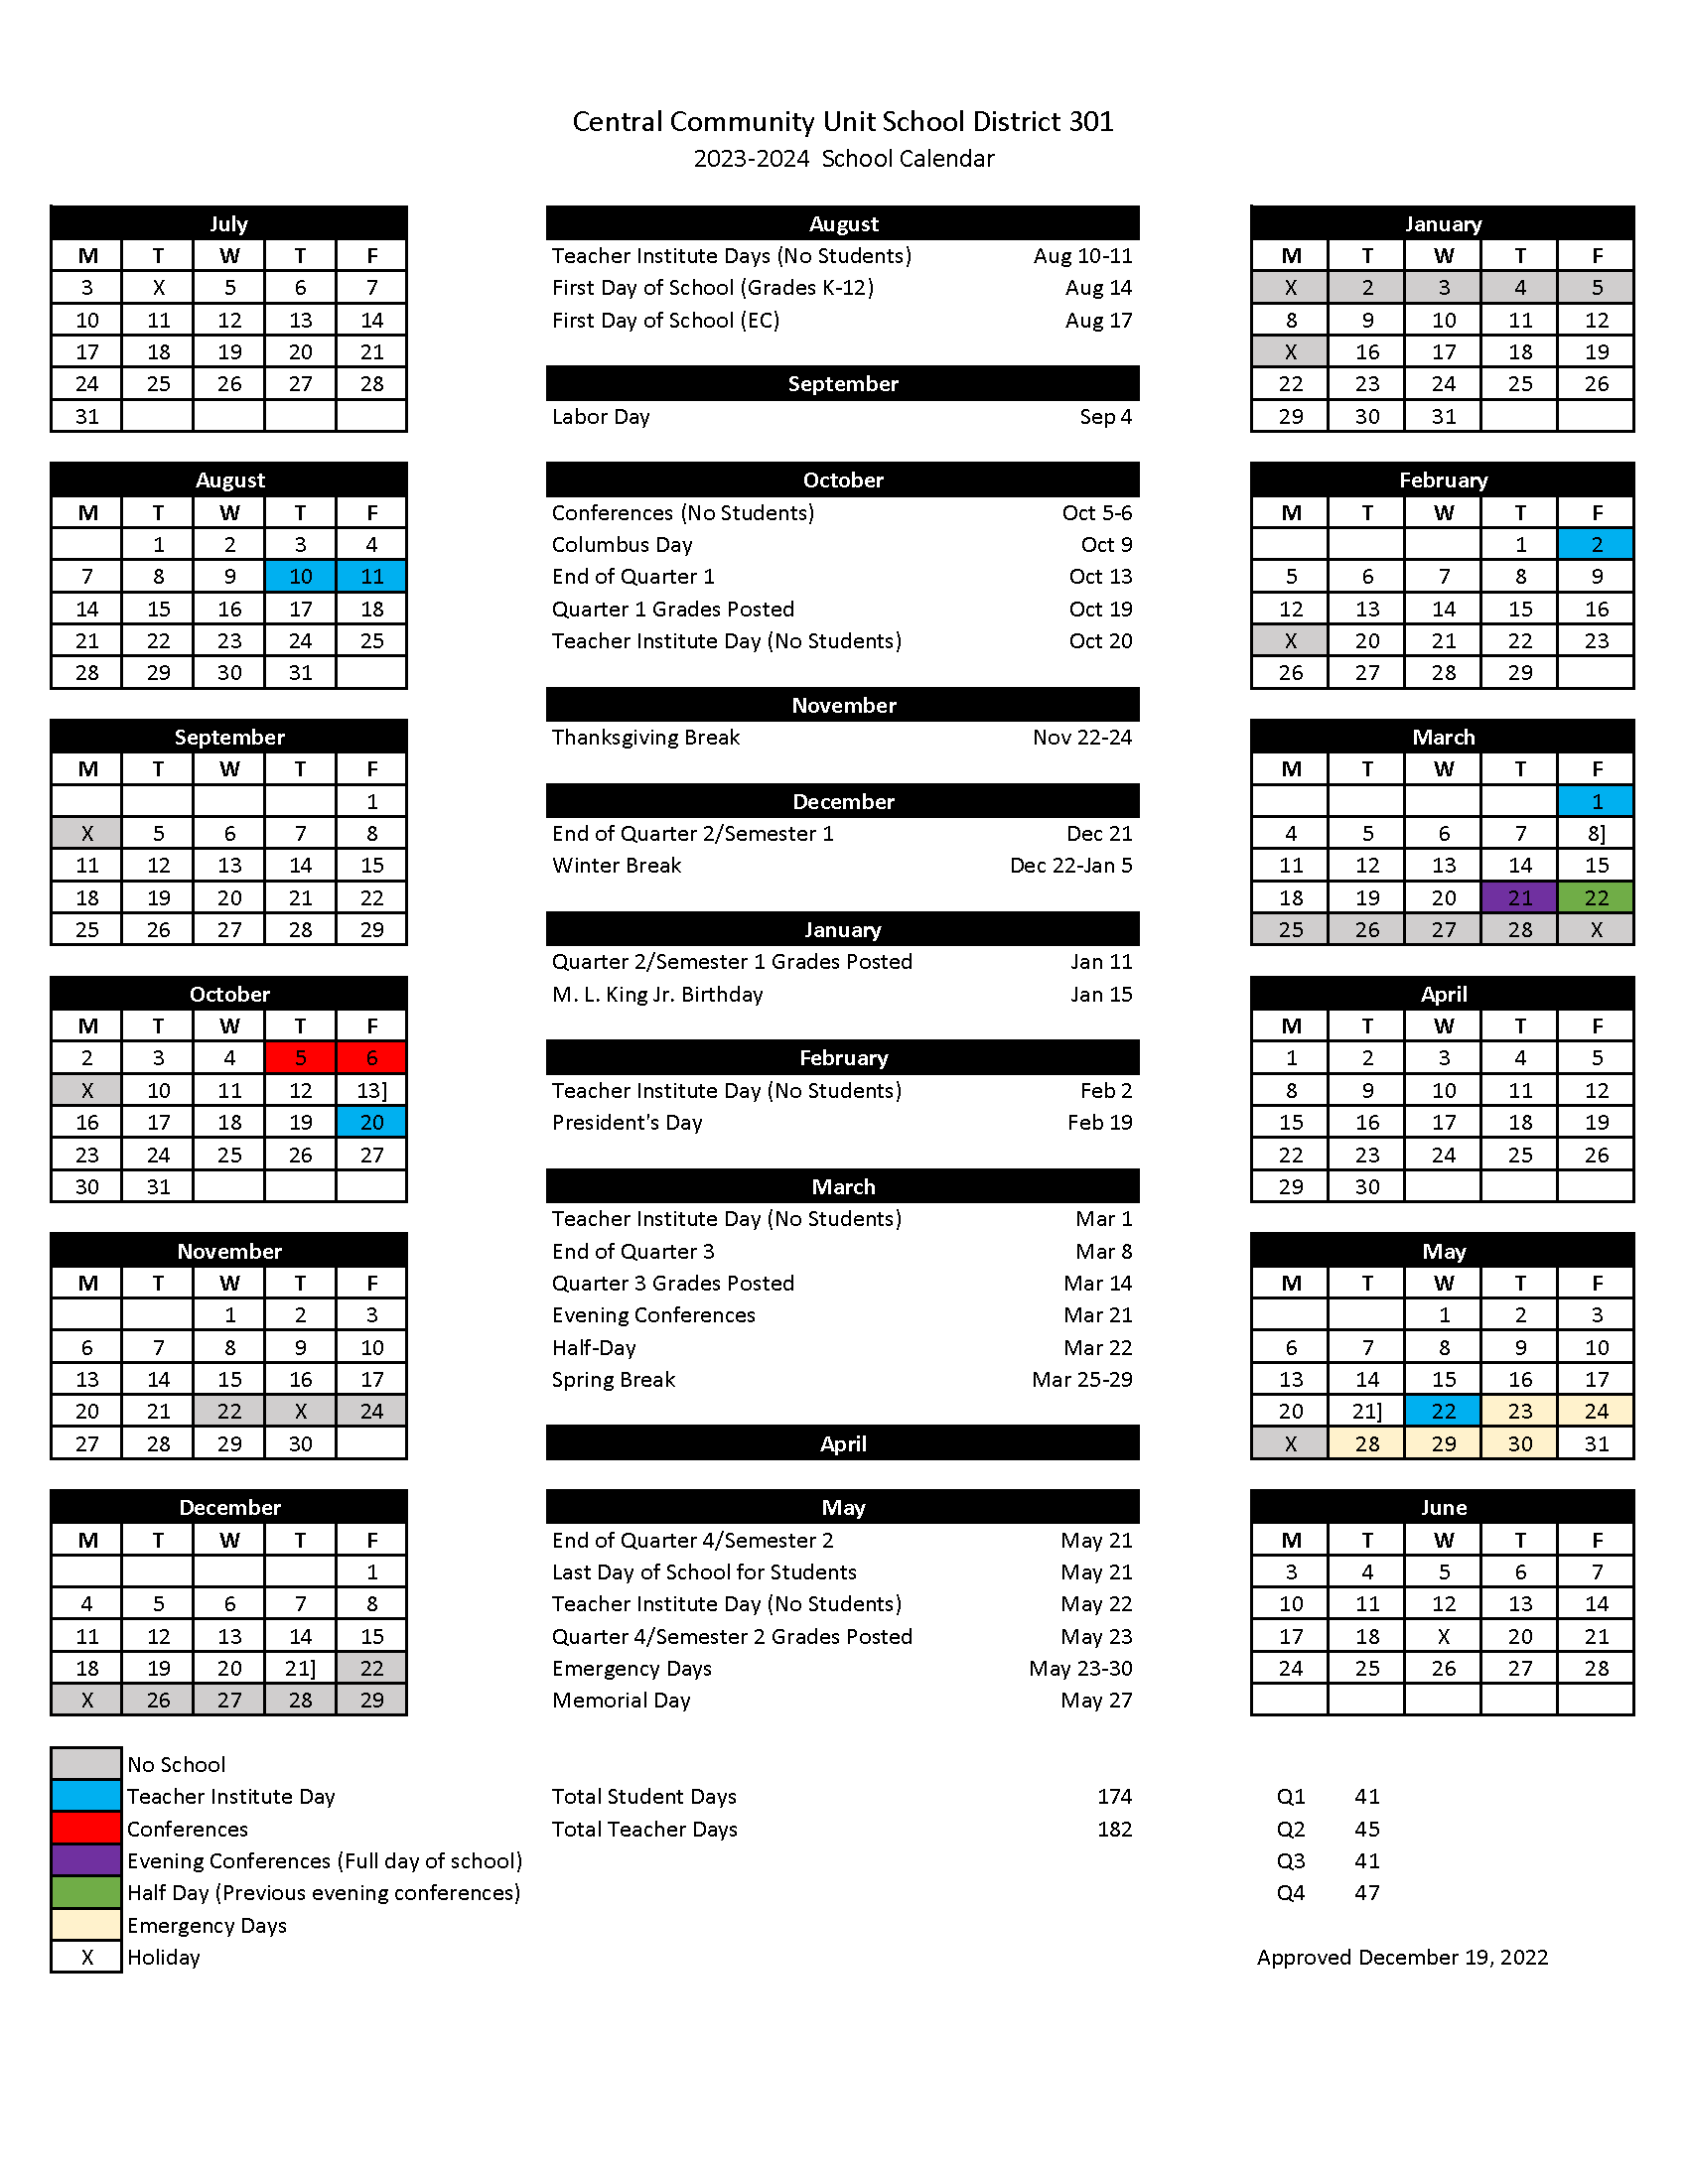 https://central301.net/wp-content/uploads/2023/01/2023-2024-Approved-Calendar-.png